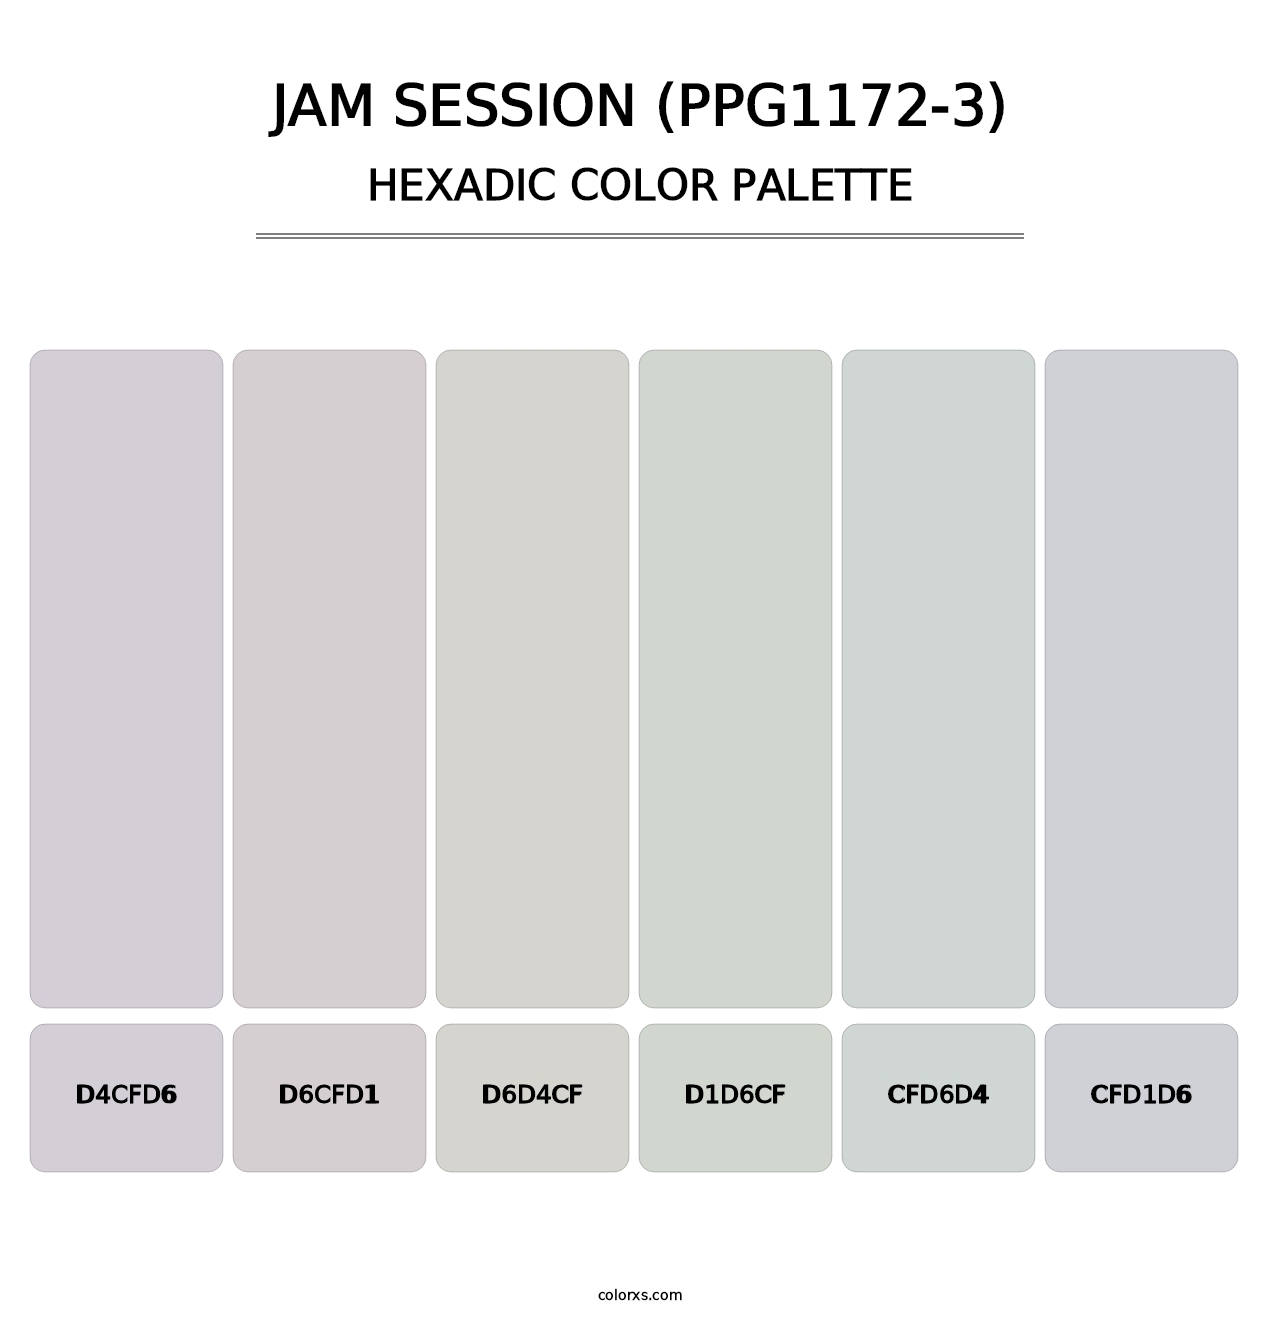 Jam Session (PPG1172-3) - Hexadic Color Palette